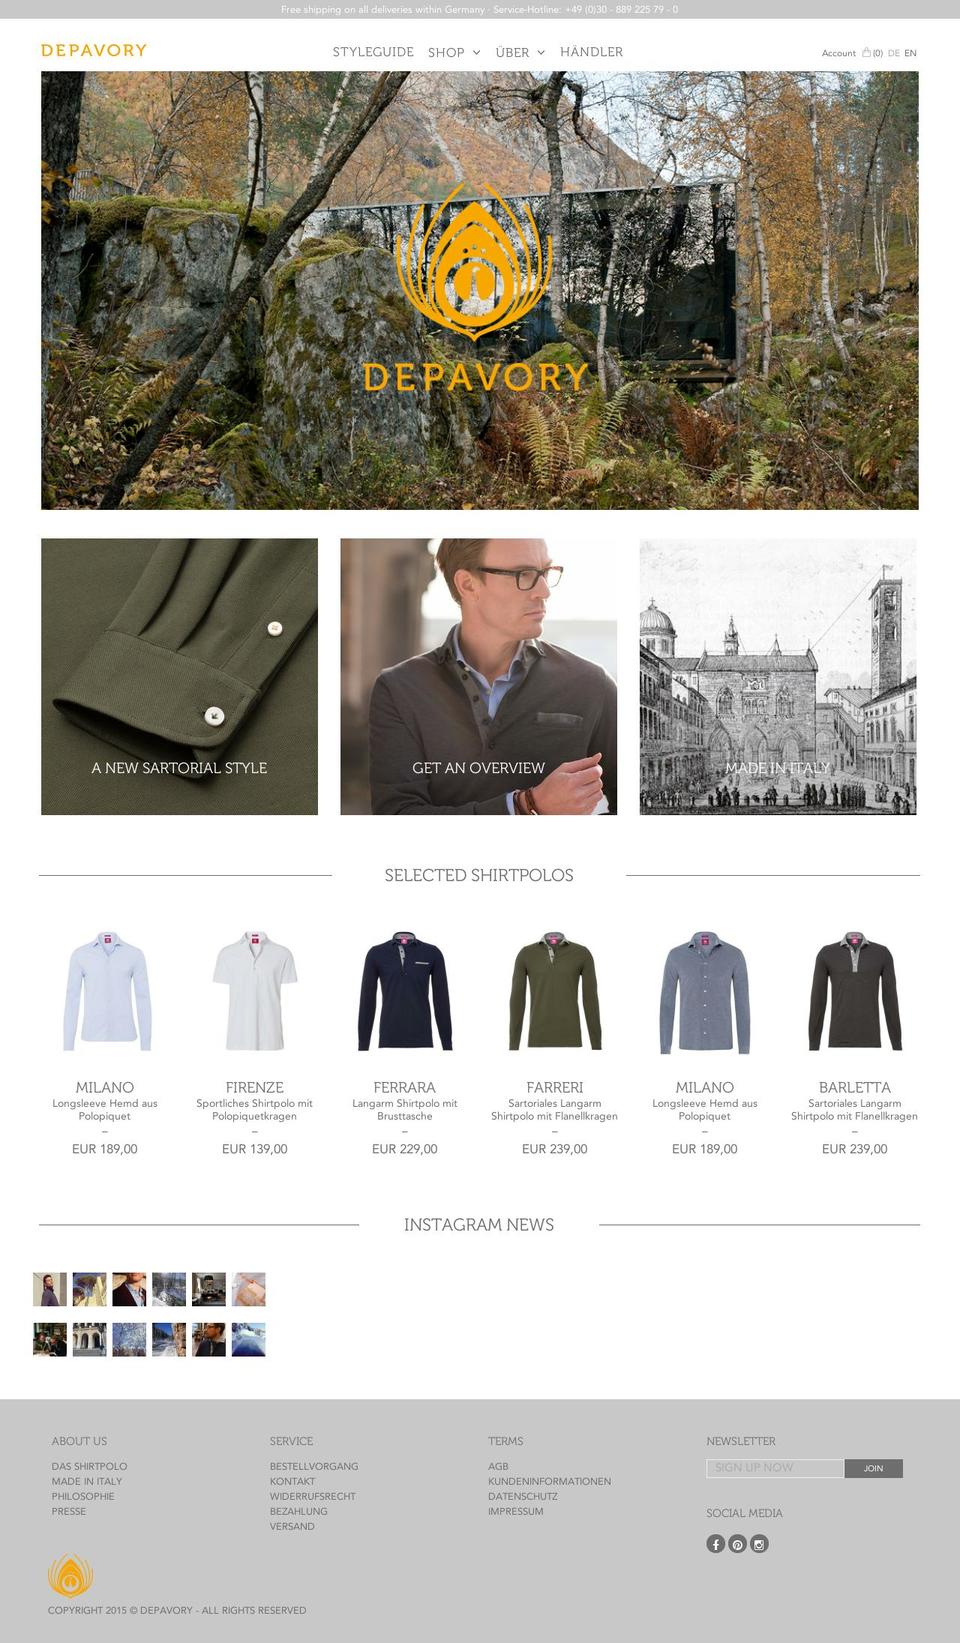 Depavory (2016-05-13) Shopify theme site example shirtpoloworld.net